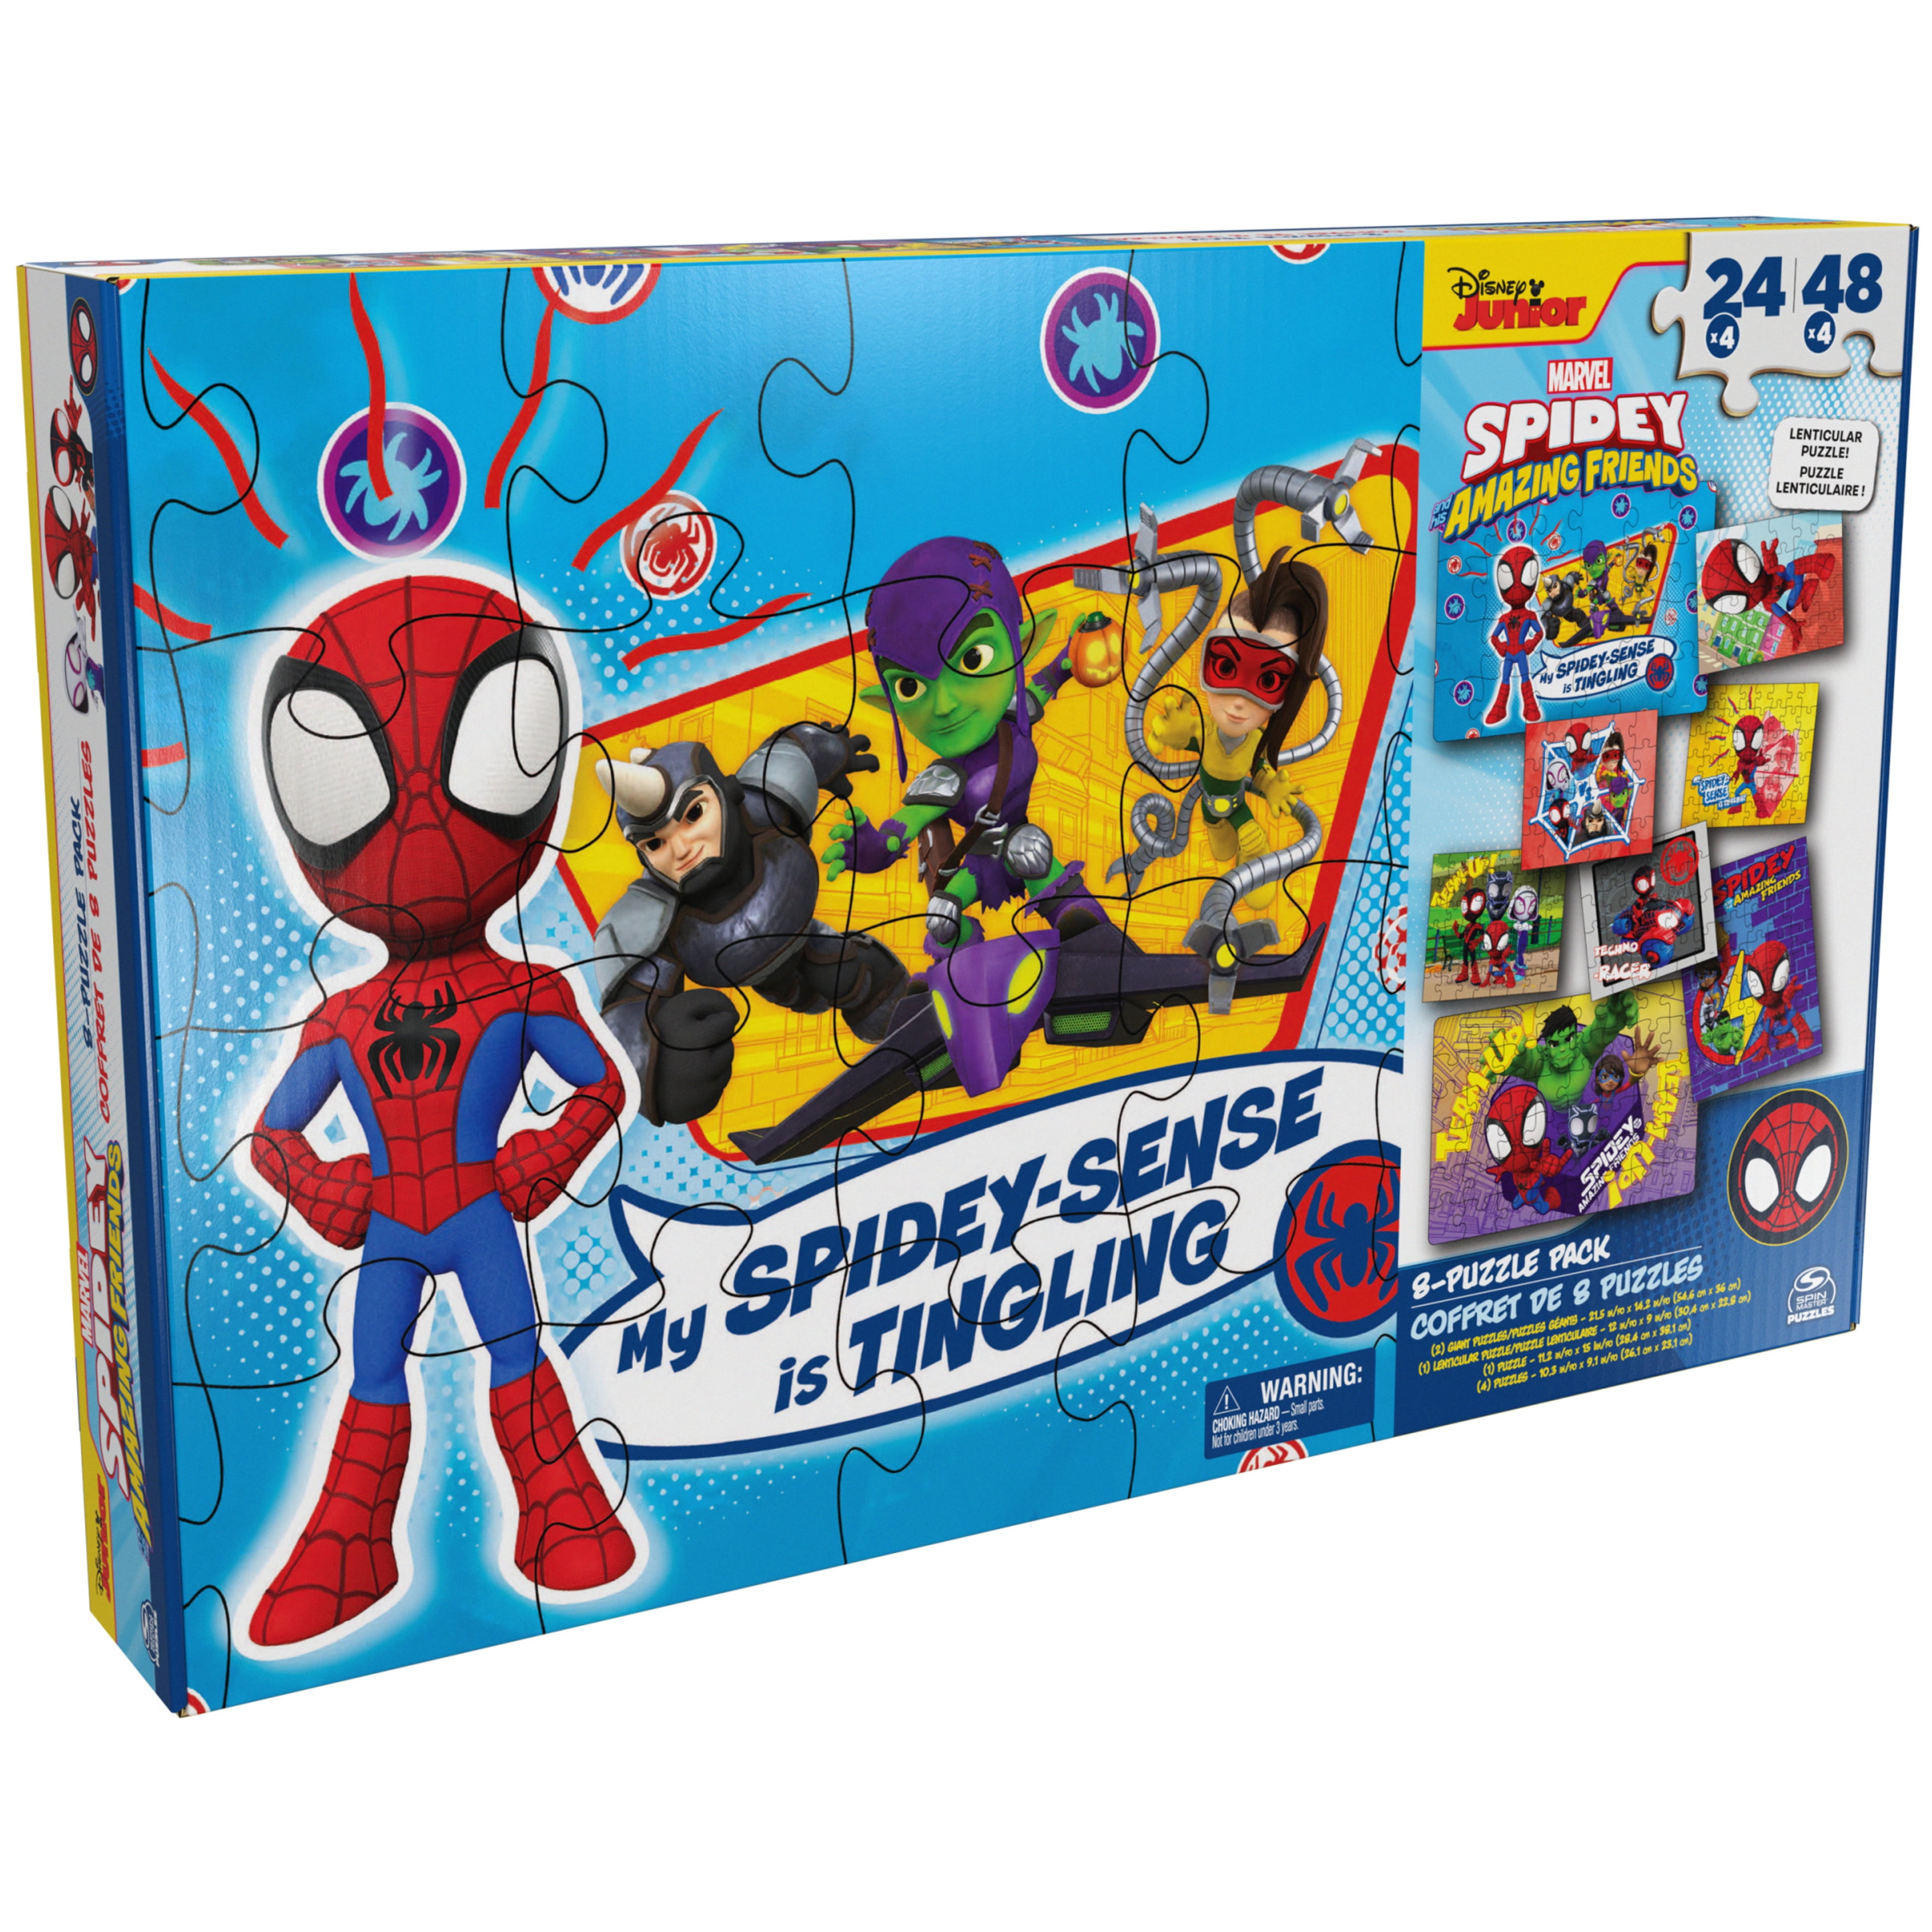  Marvel Spiderman Jigsaw Puzzle for Kids Bundle